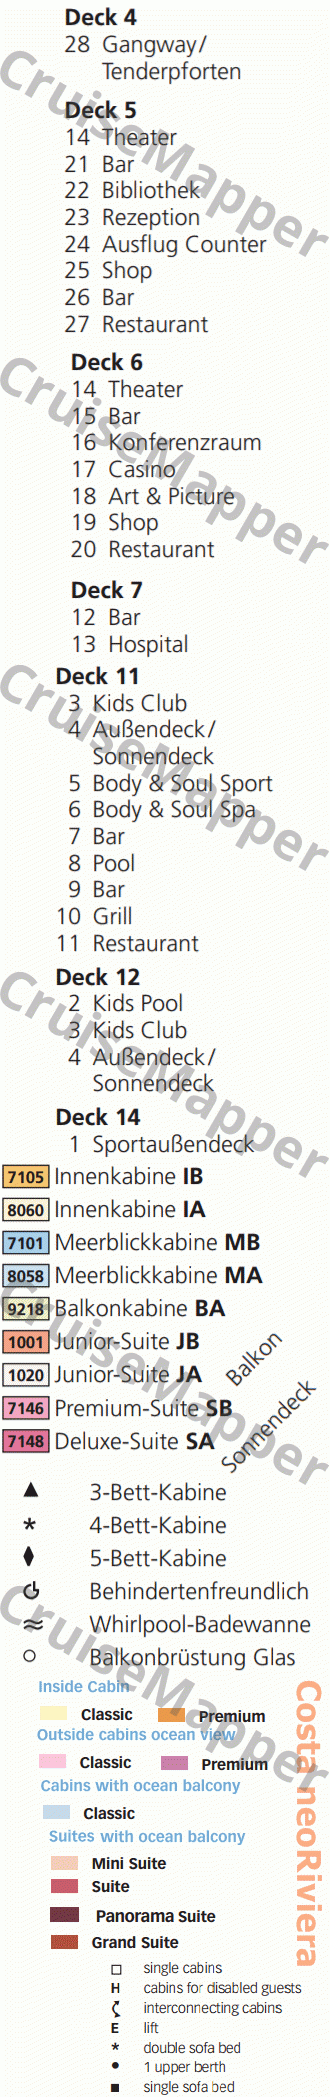 Ambition deck 11 plan (Lido-Pools-Spa-Kids) legend